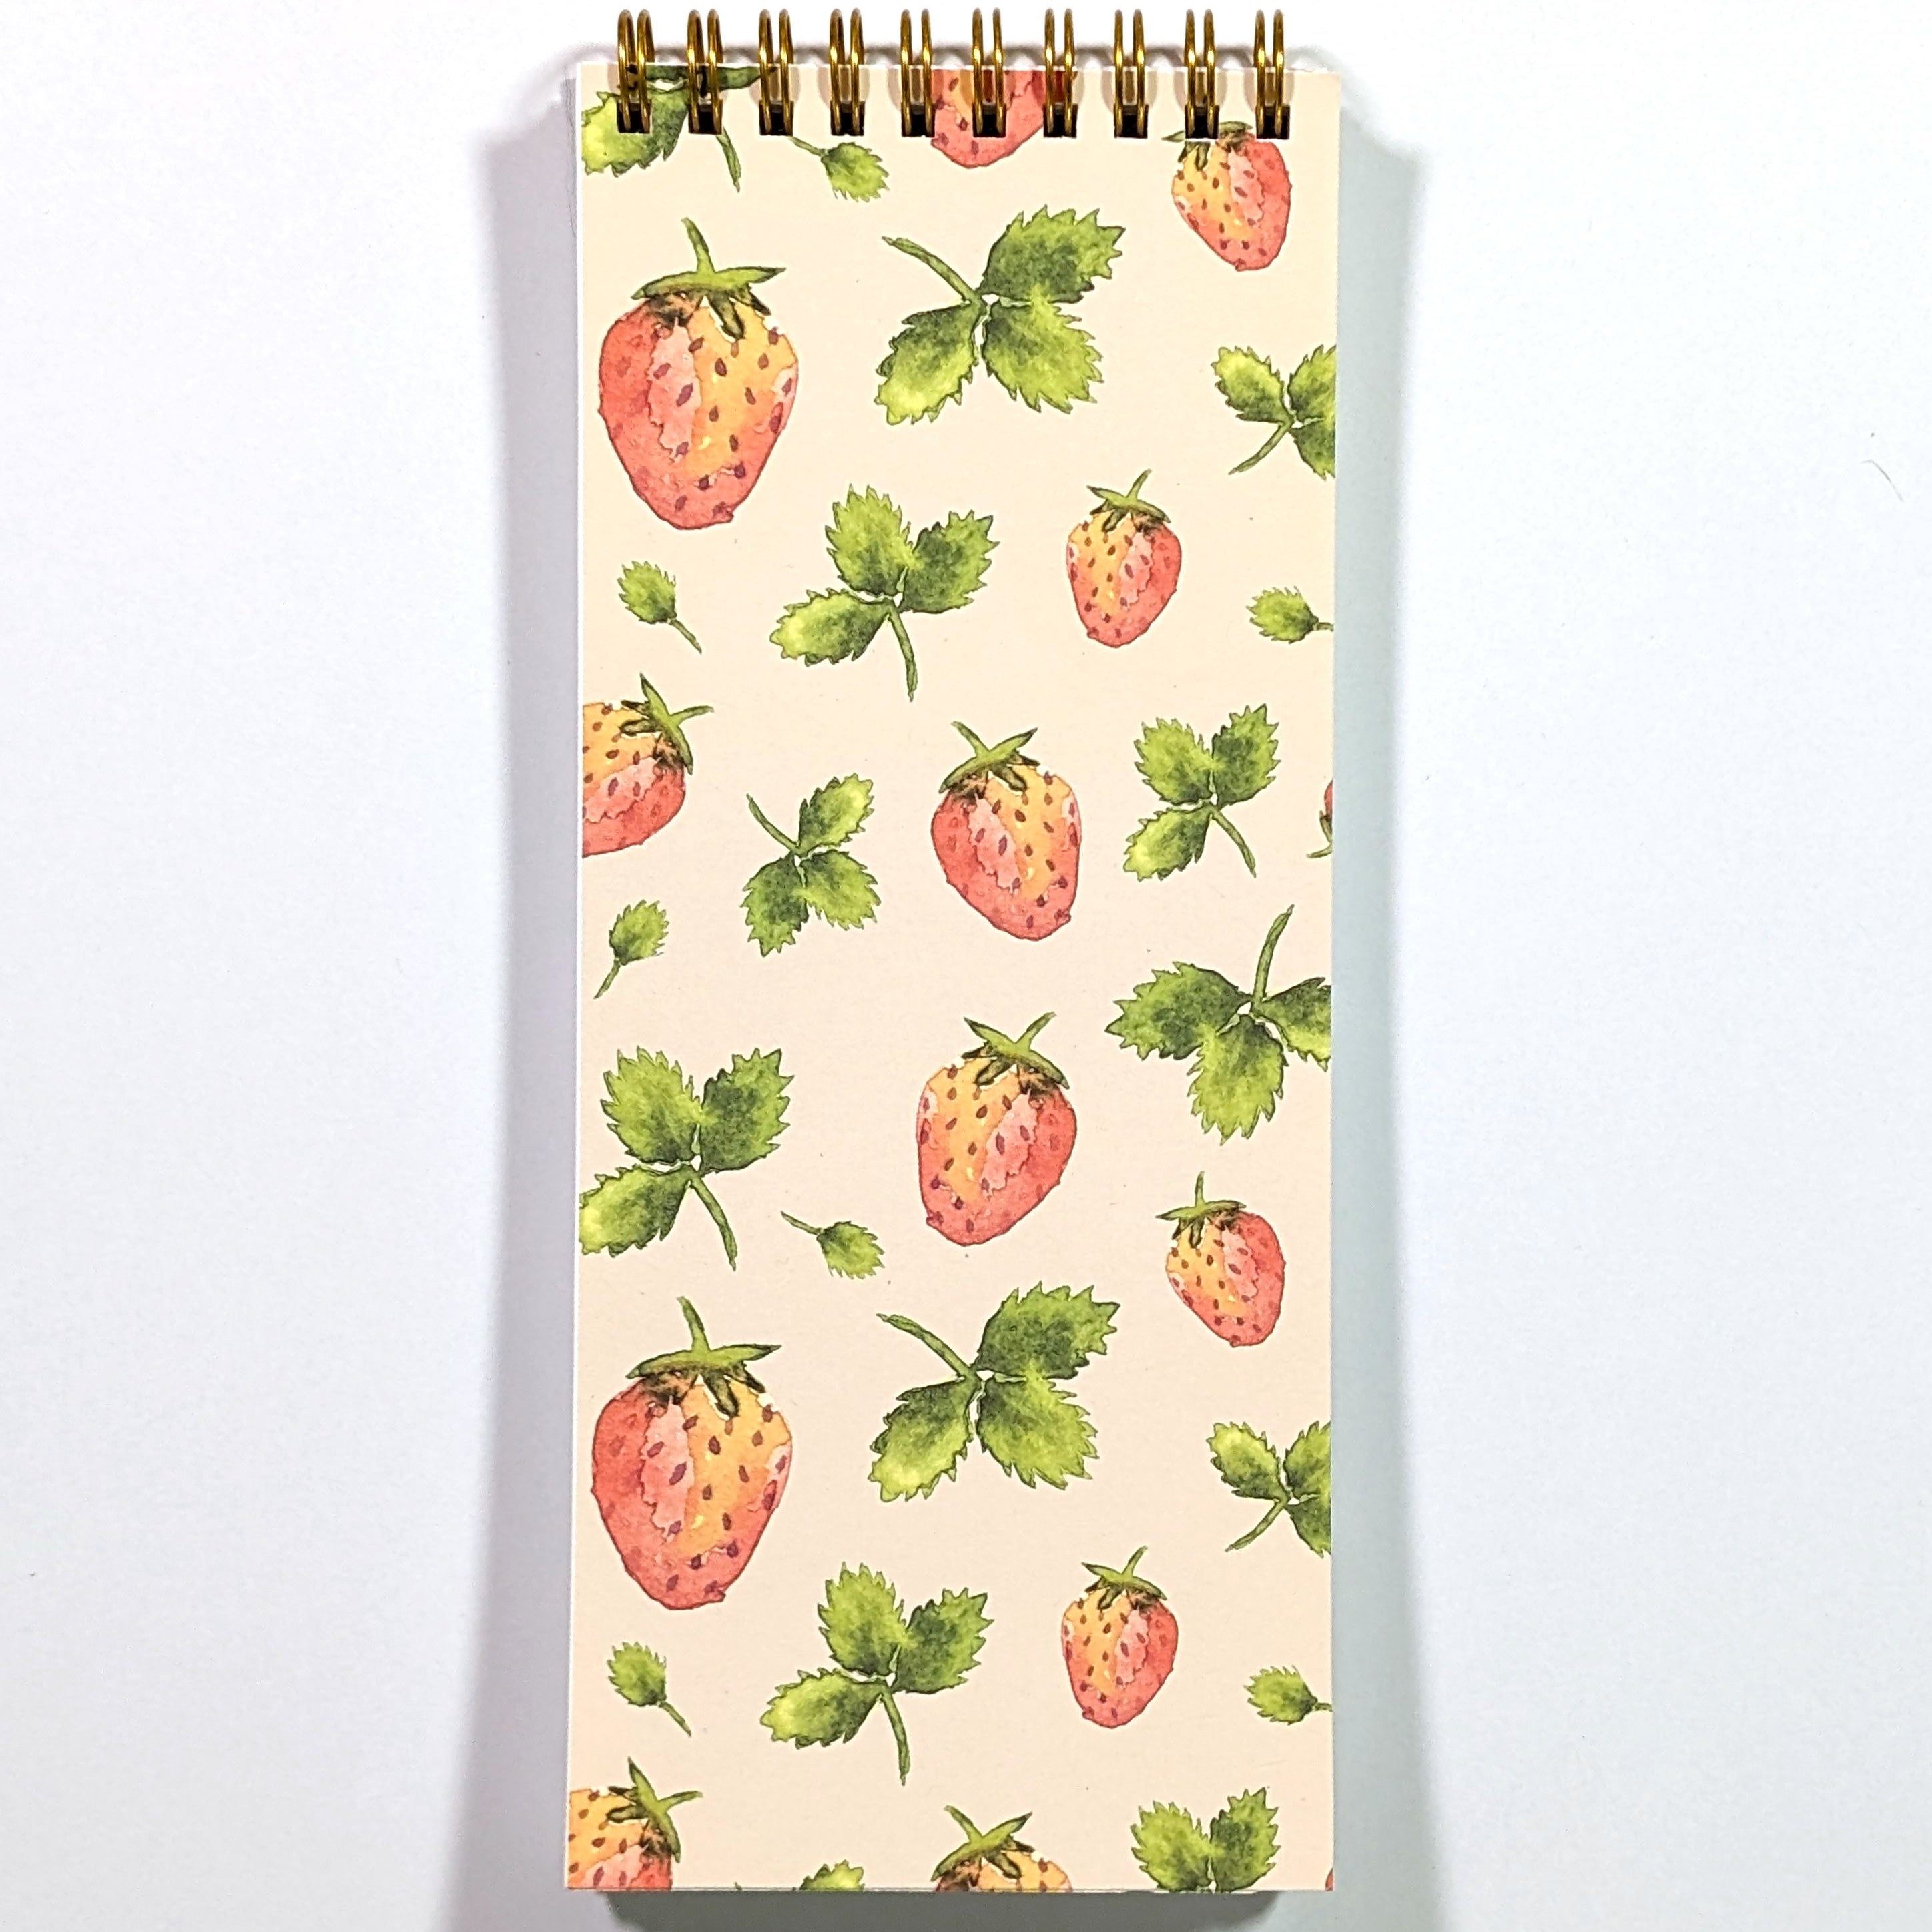 Strawberry Fields Top Spiral To-Do List Notebook Notebooks Lucid Moon Studio 